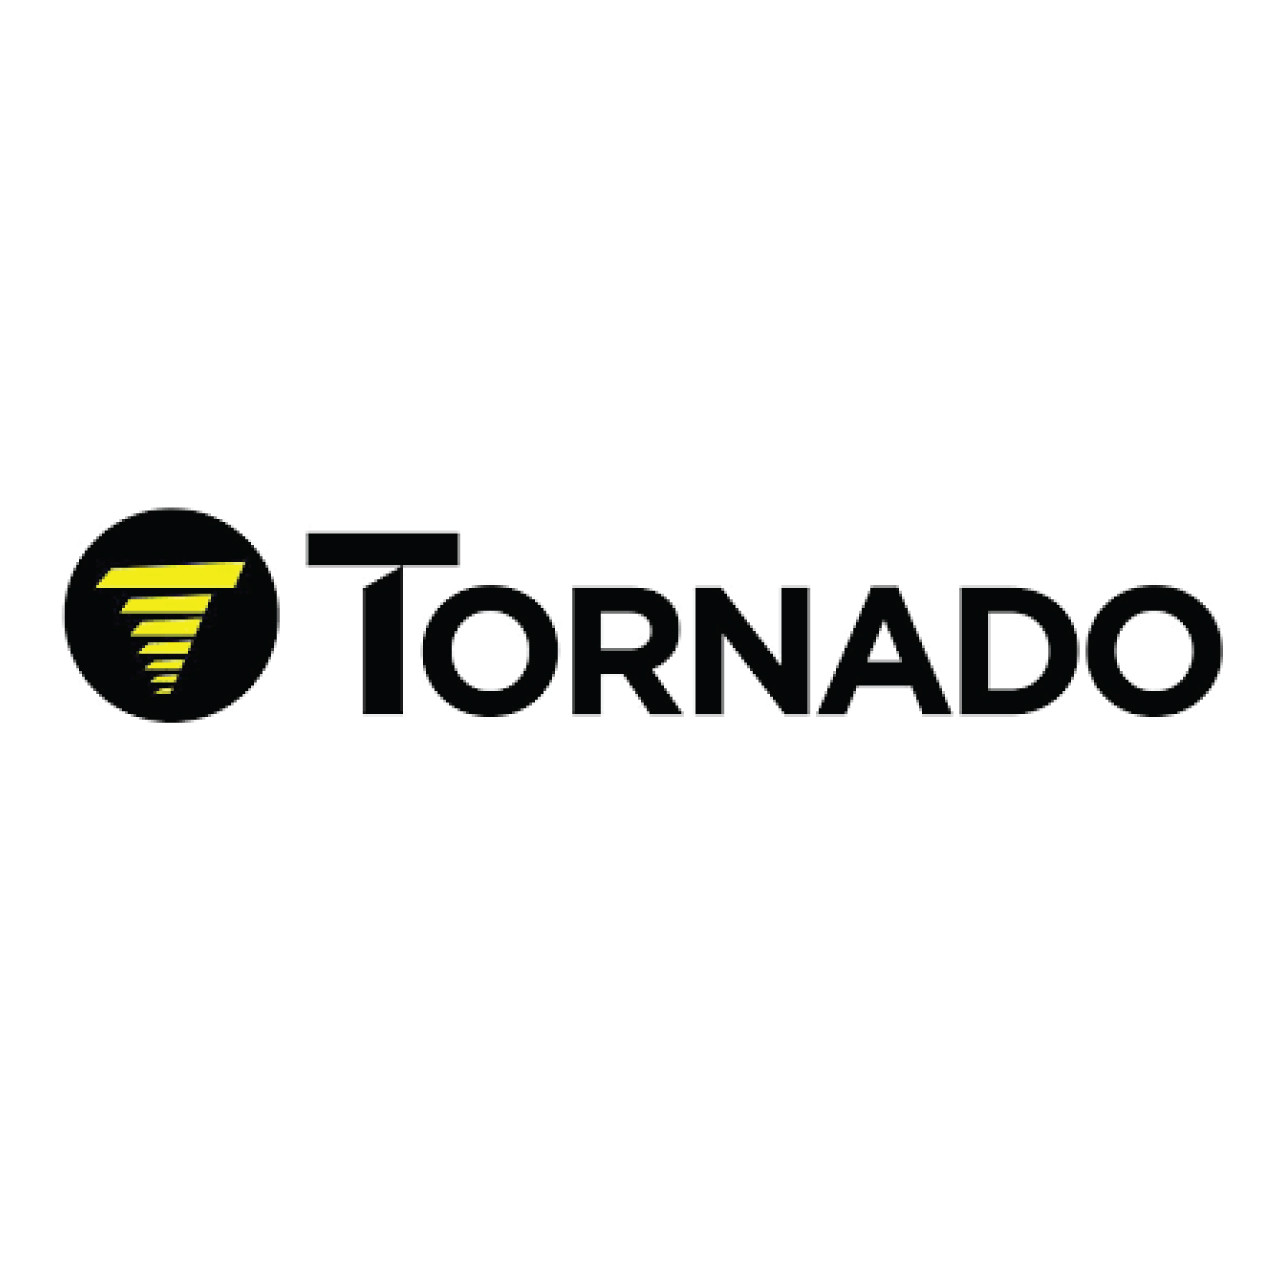 46107300, Tornado 46107300, Tornado FRAME, Tornado parts